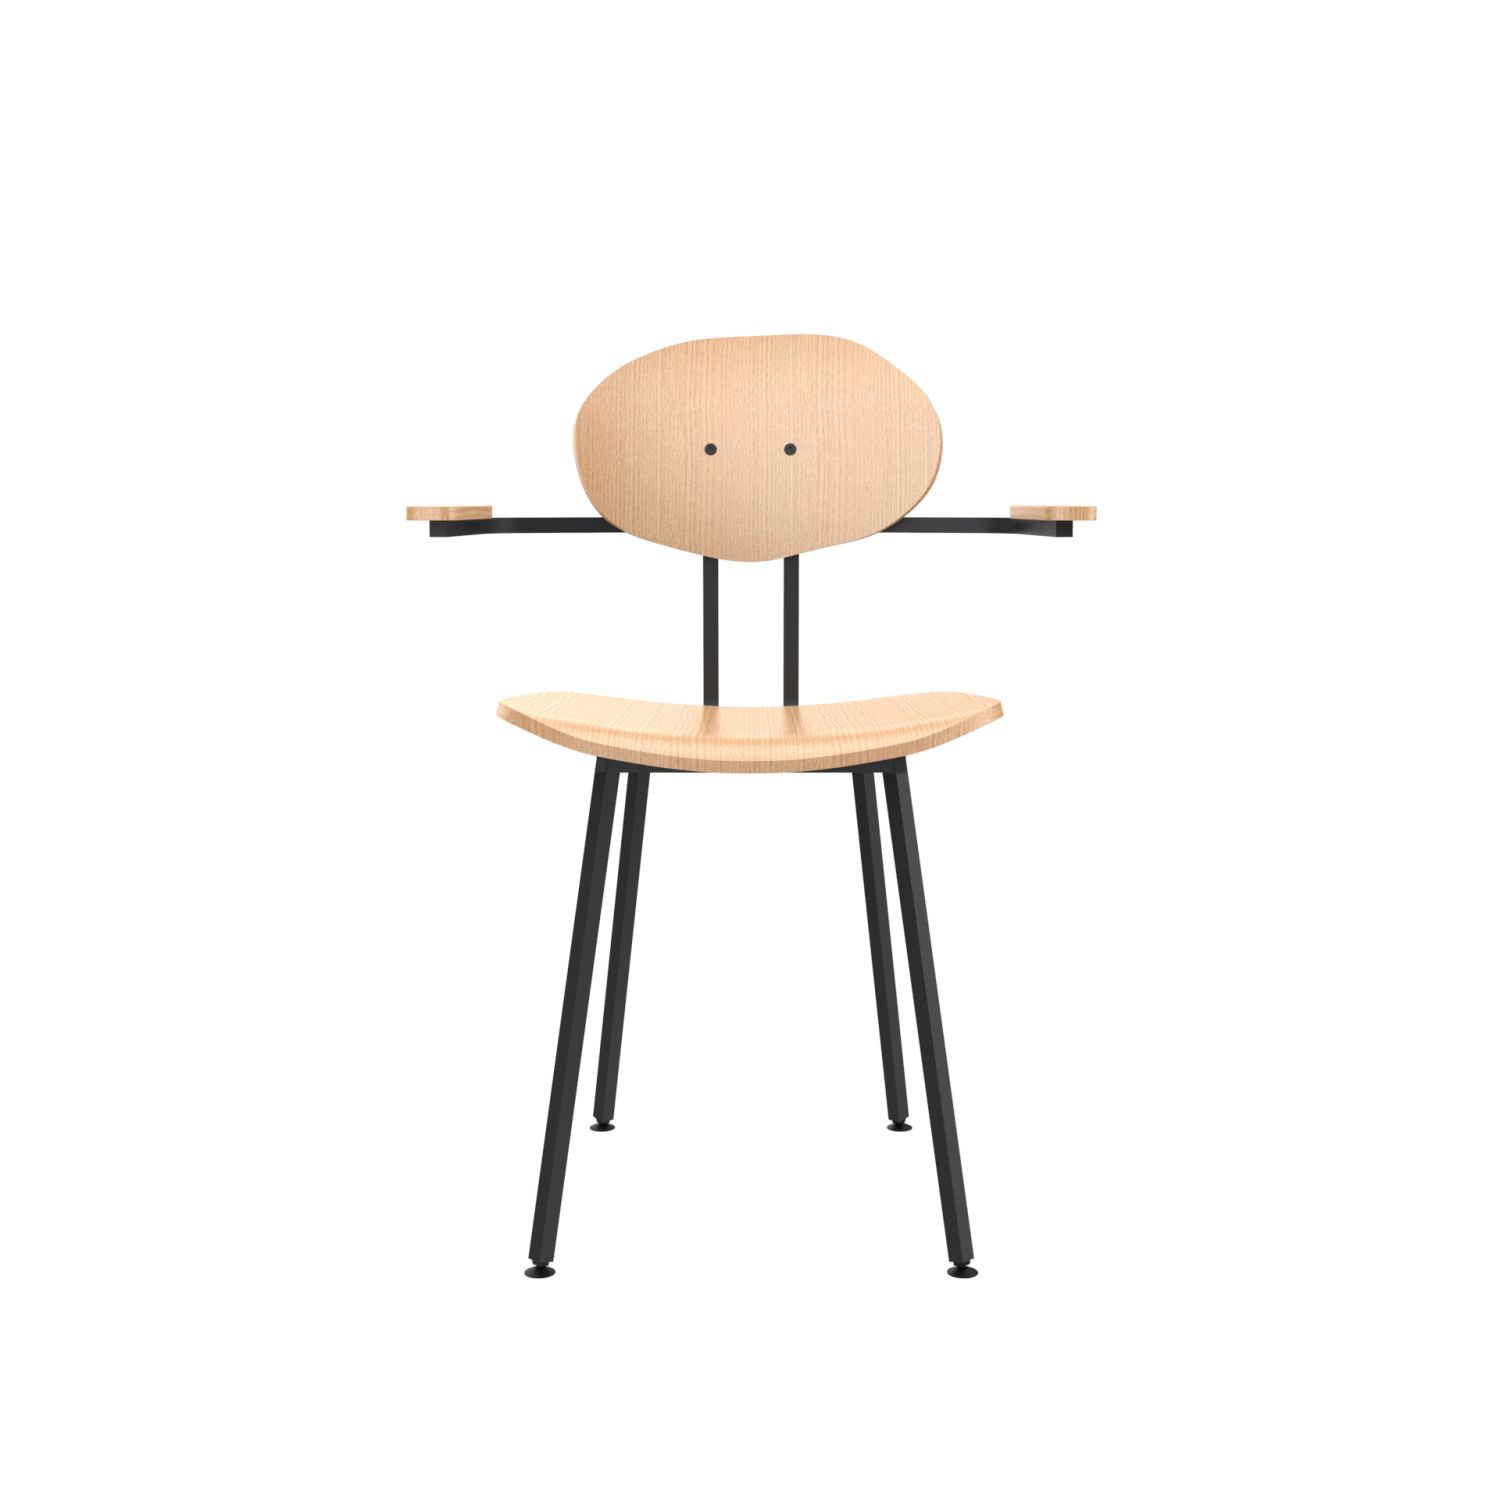 lensvelt maarten baas chair wooden 102 not stackable with armrests backrest d european oak natural black ral9005 hard leg ends